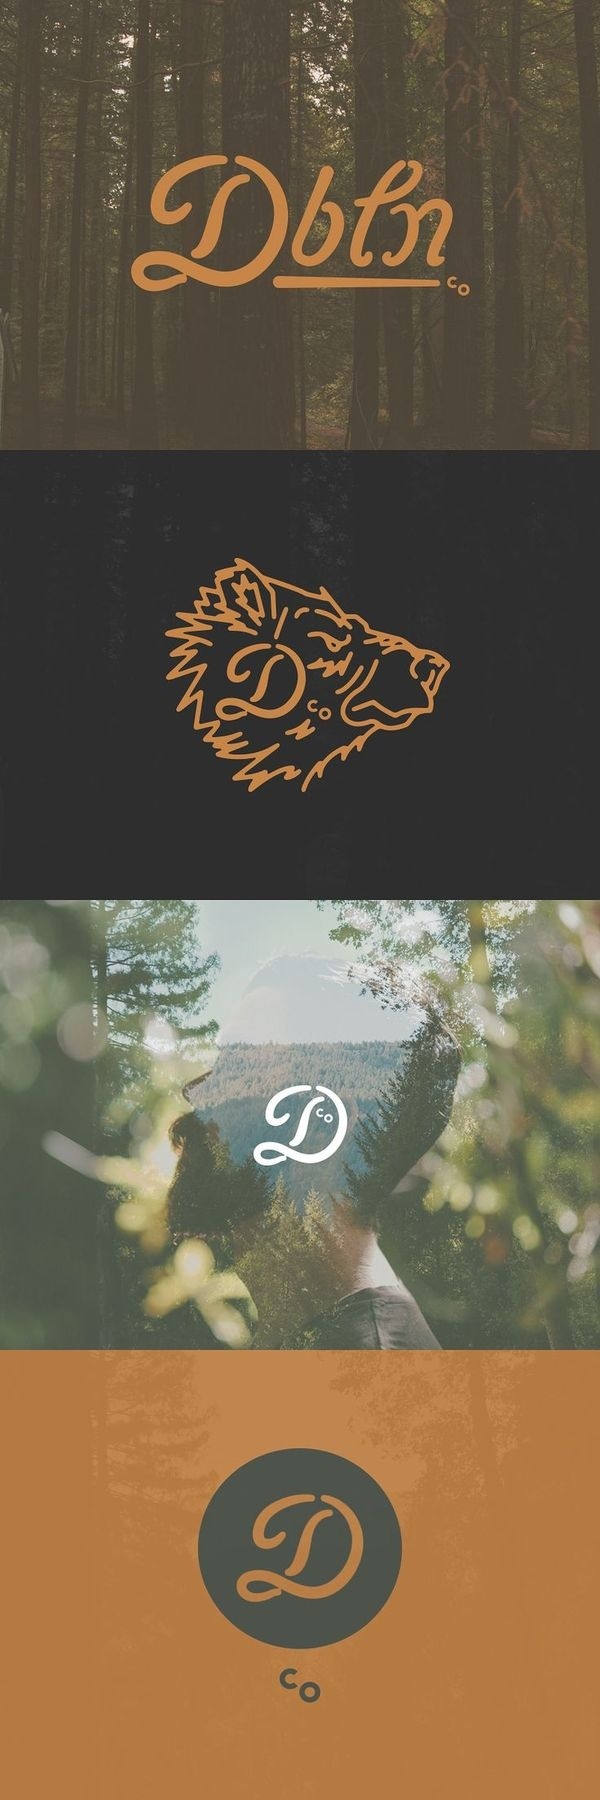 Dbln Co. by Danny Jones #logo #system #identity